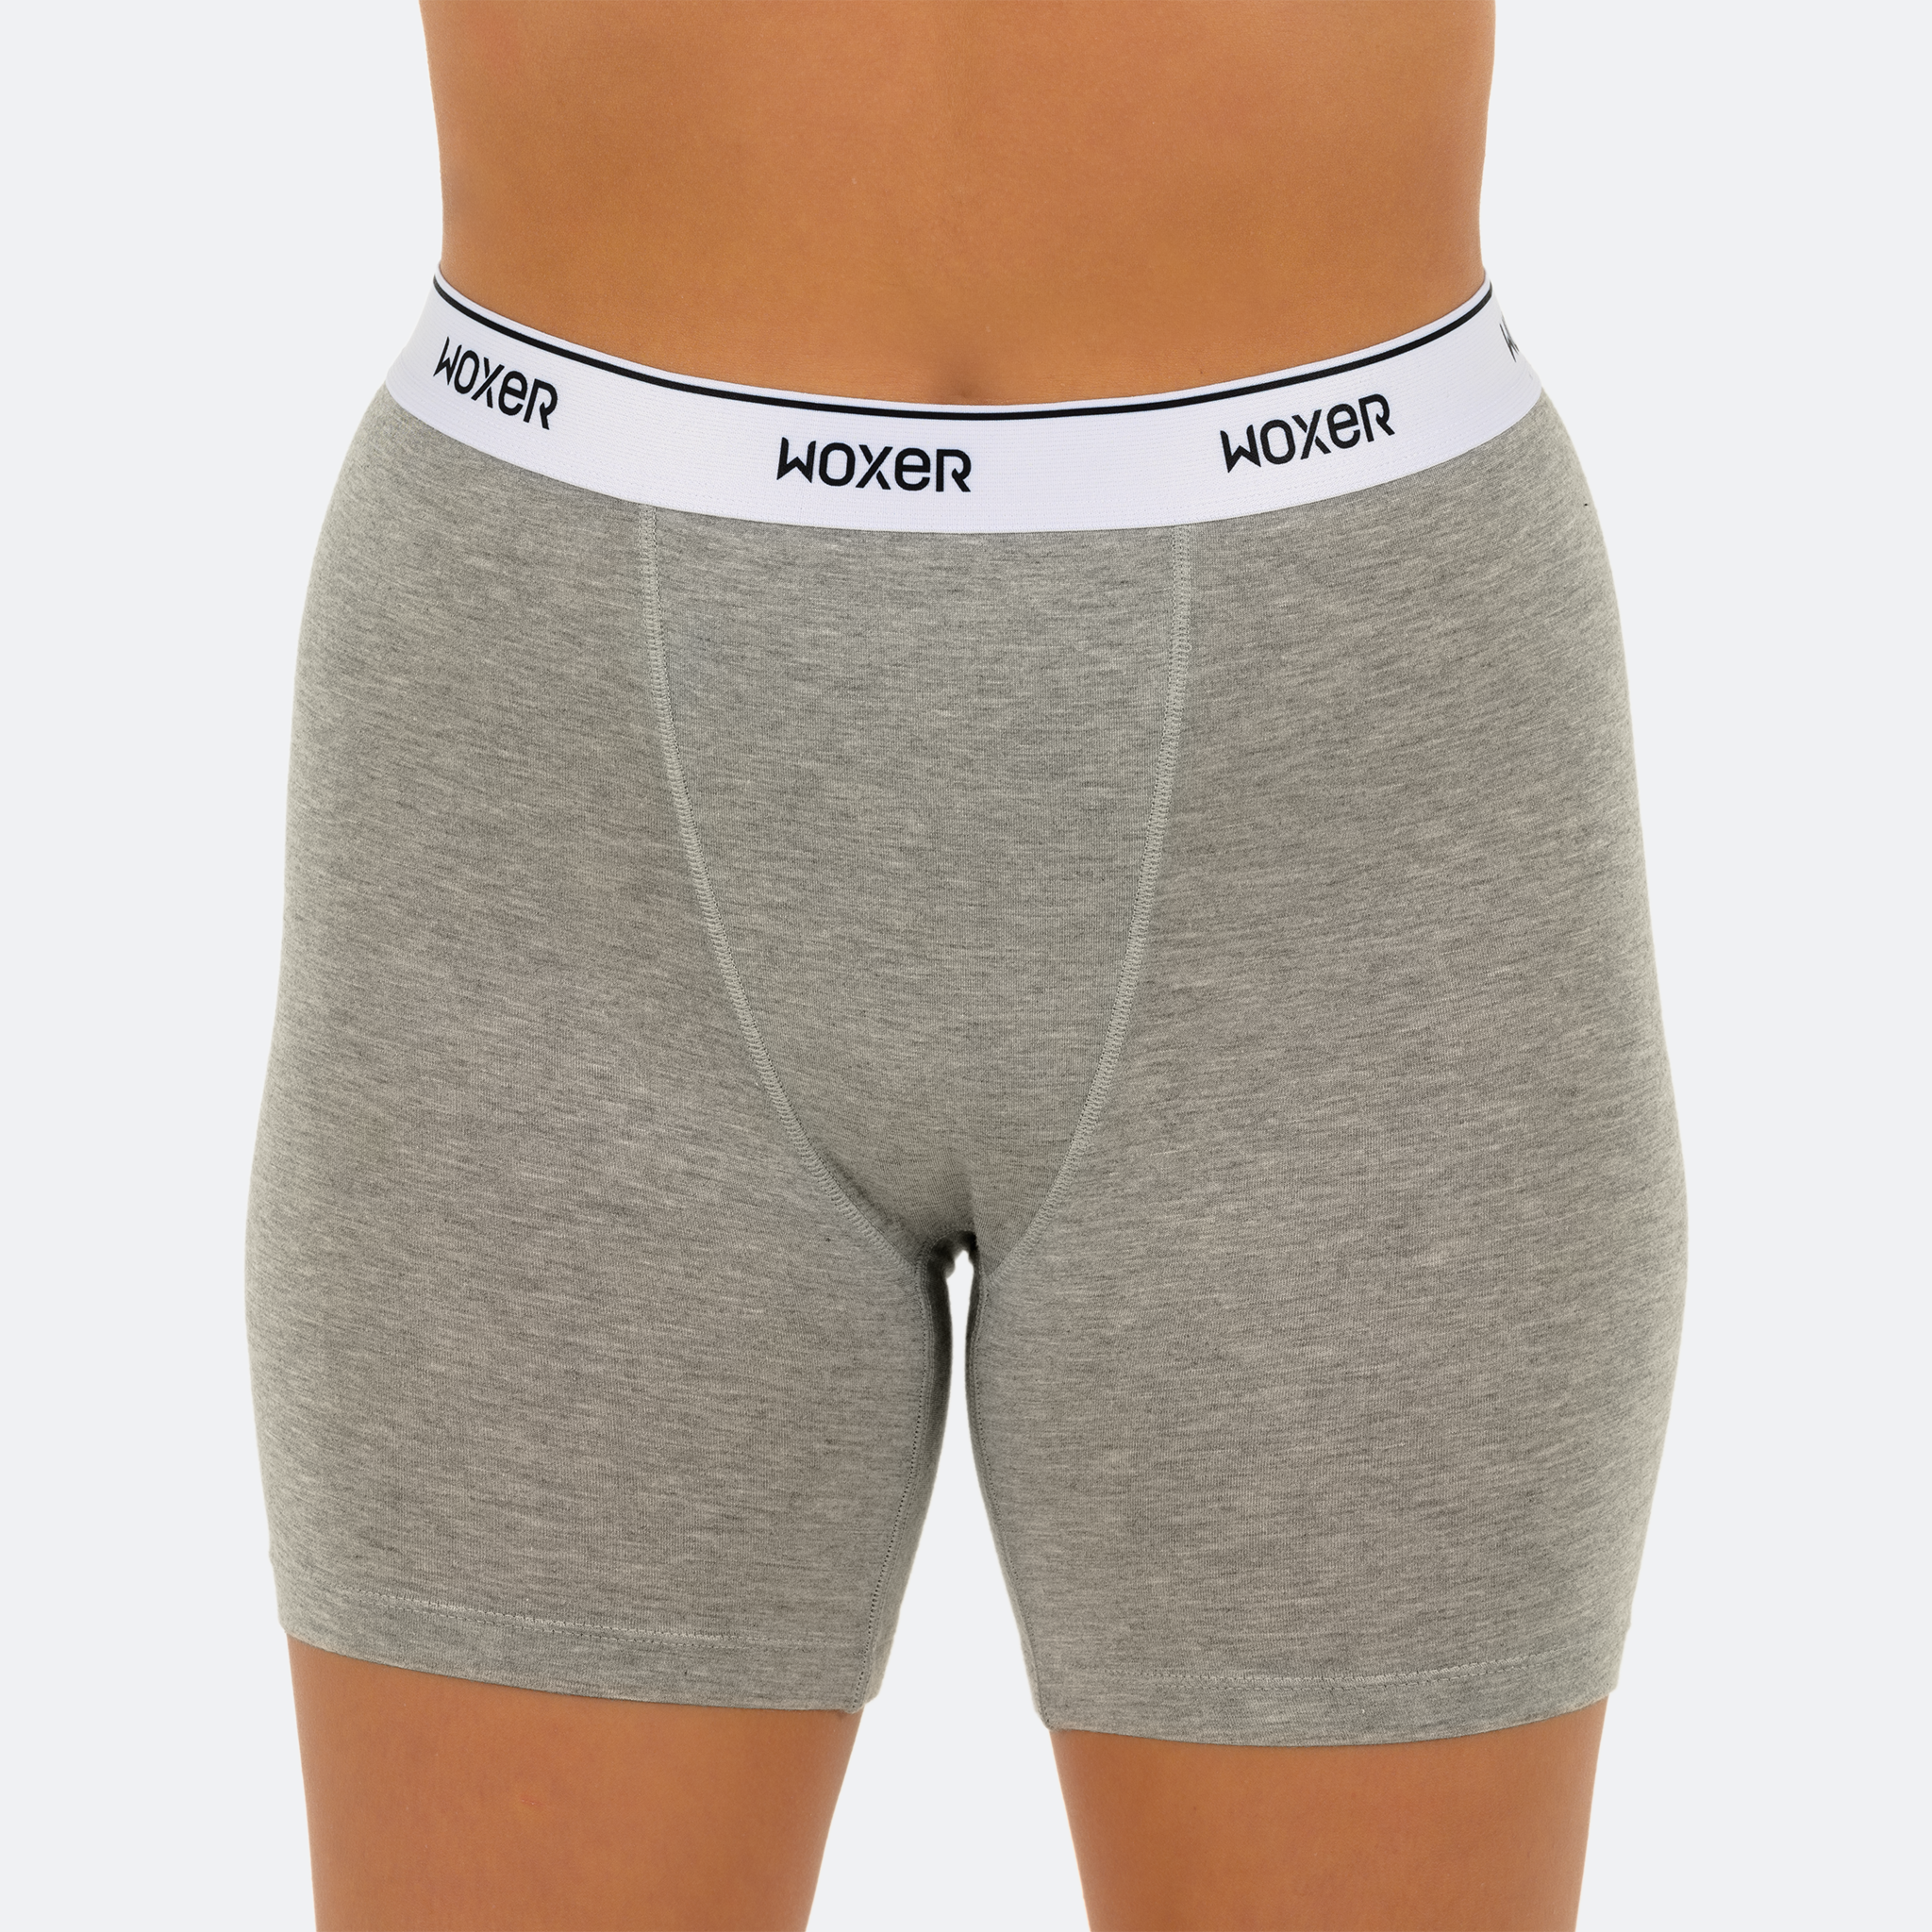 An Honest Review of Woxer's Baller Underwear, A Genderless Boxer Brief